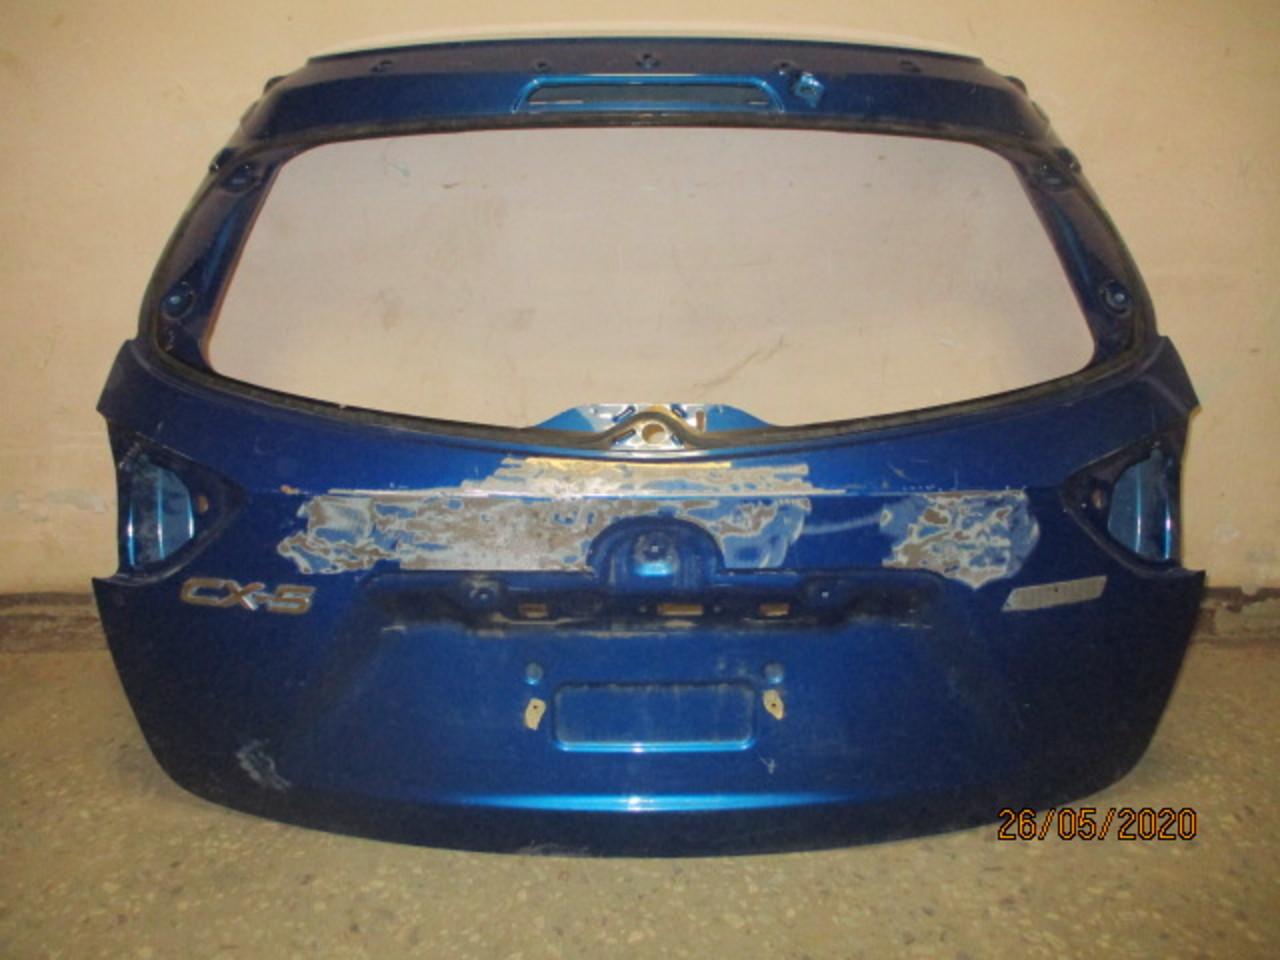 Дверь багажника на Mazda CX 5 2012>